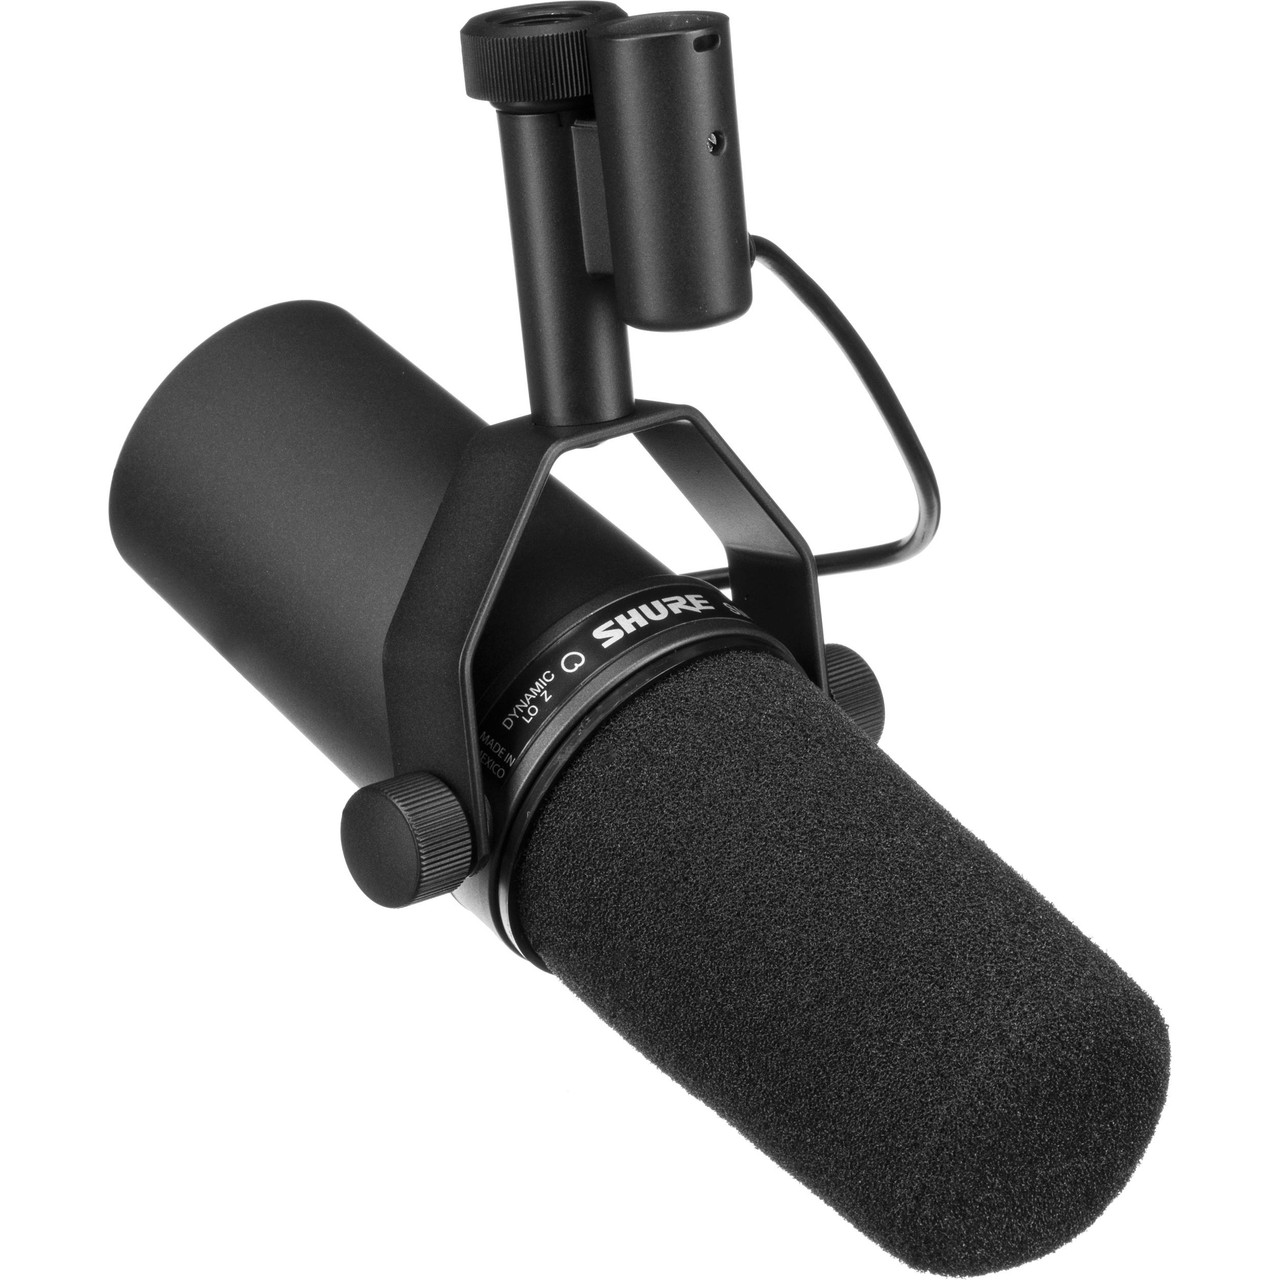 Tegenstrijdigheid Kilimanjaro passen Shure SM7B Dynamic Microphone | FrontEndAudio.com